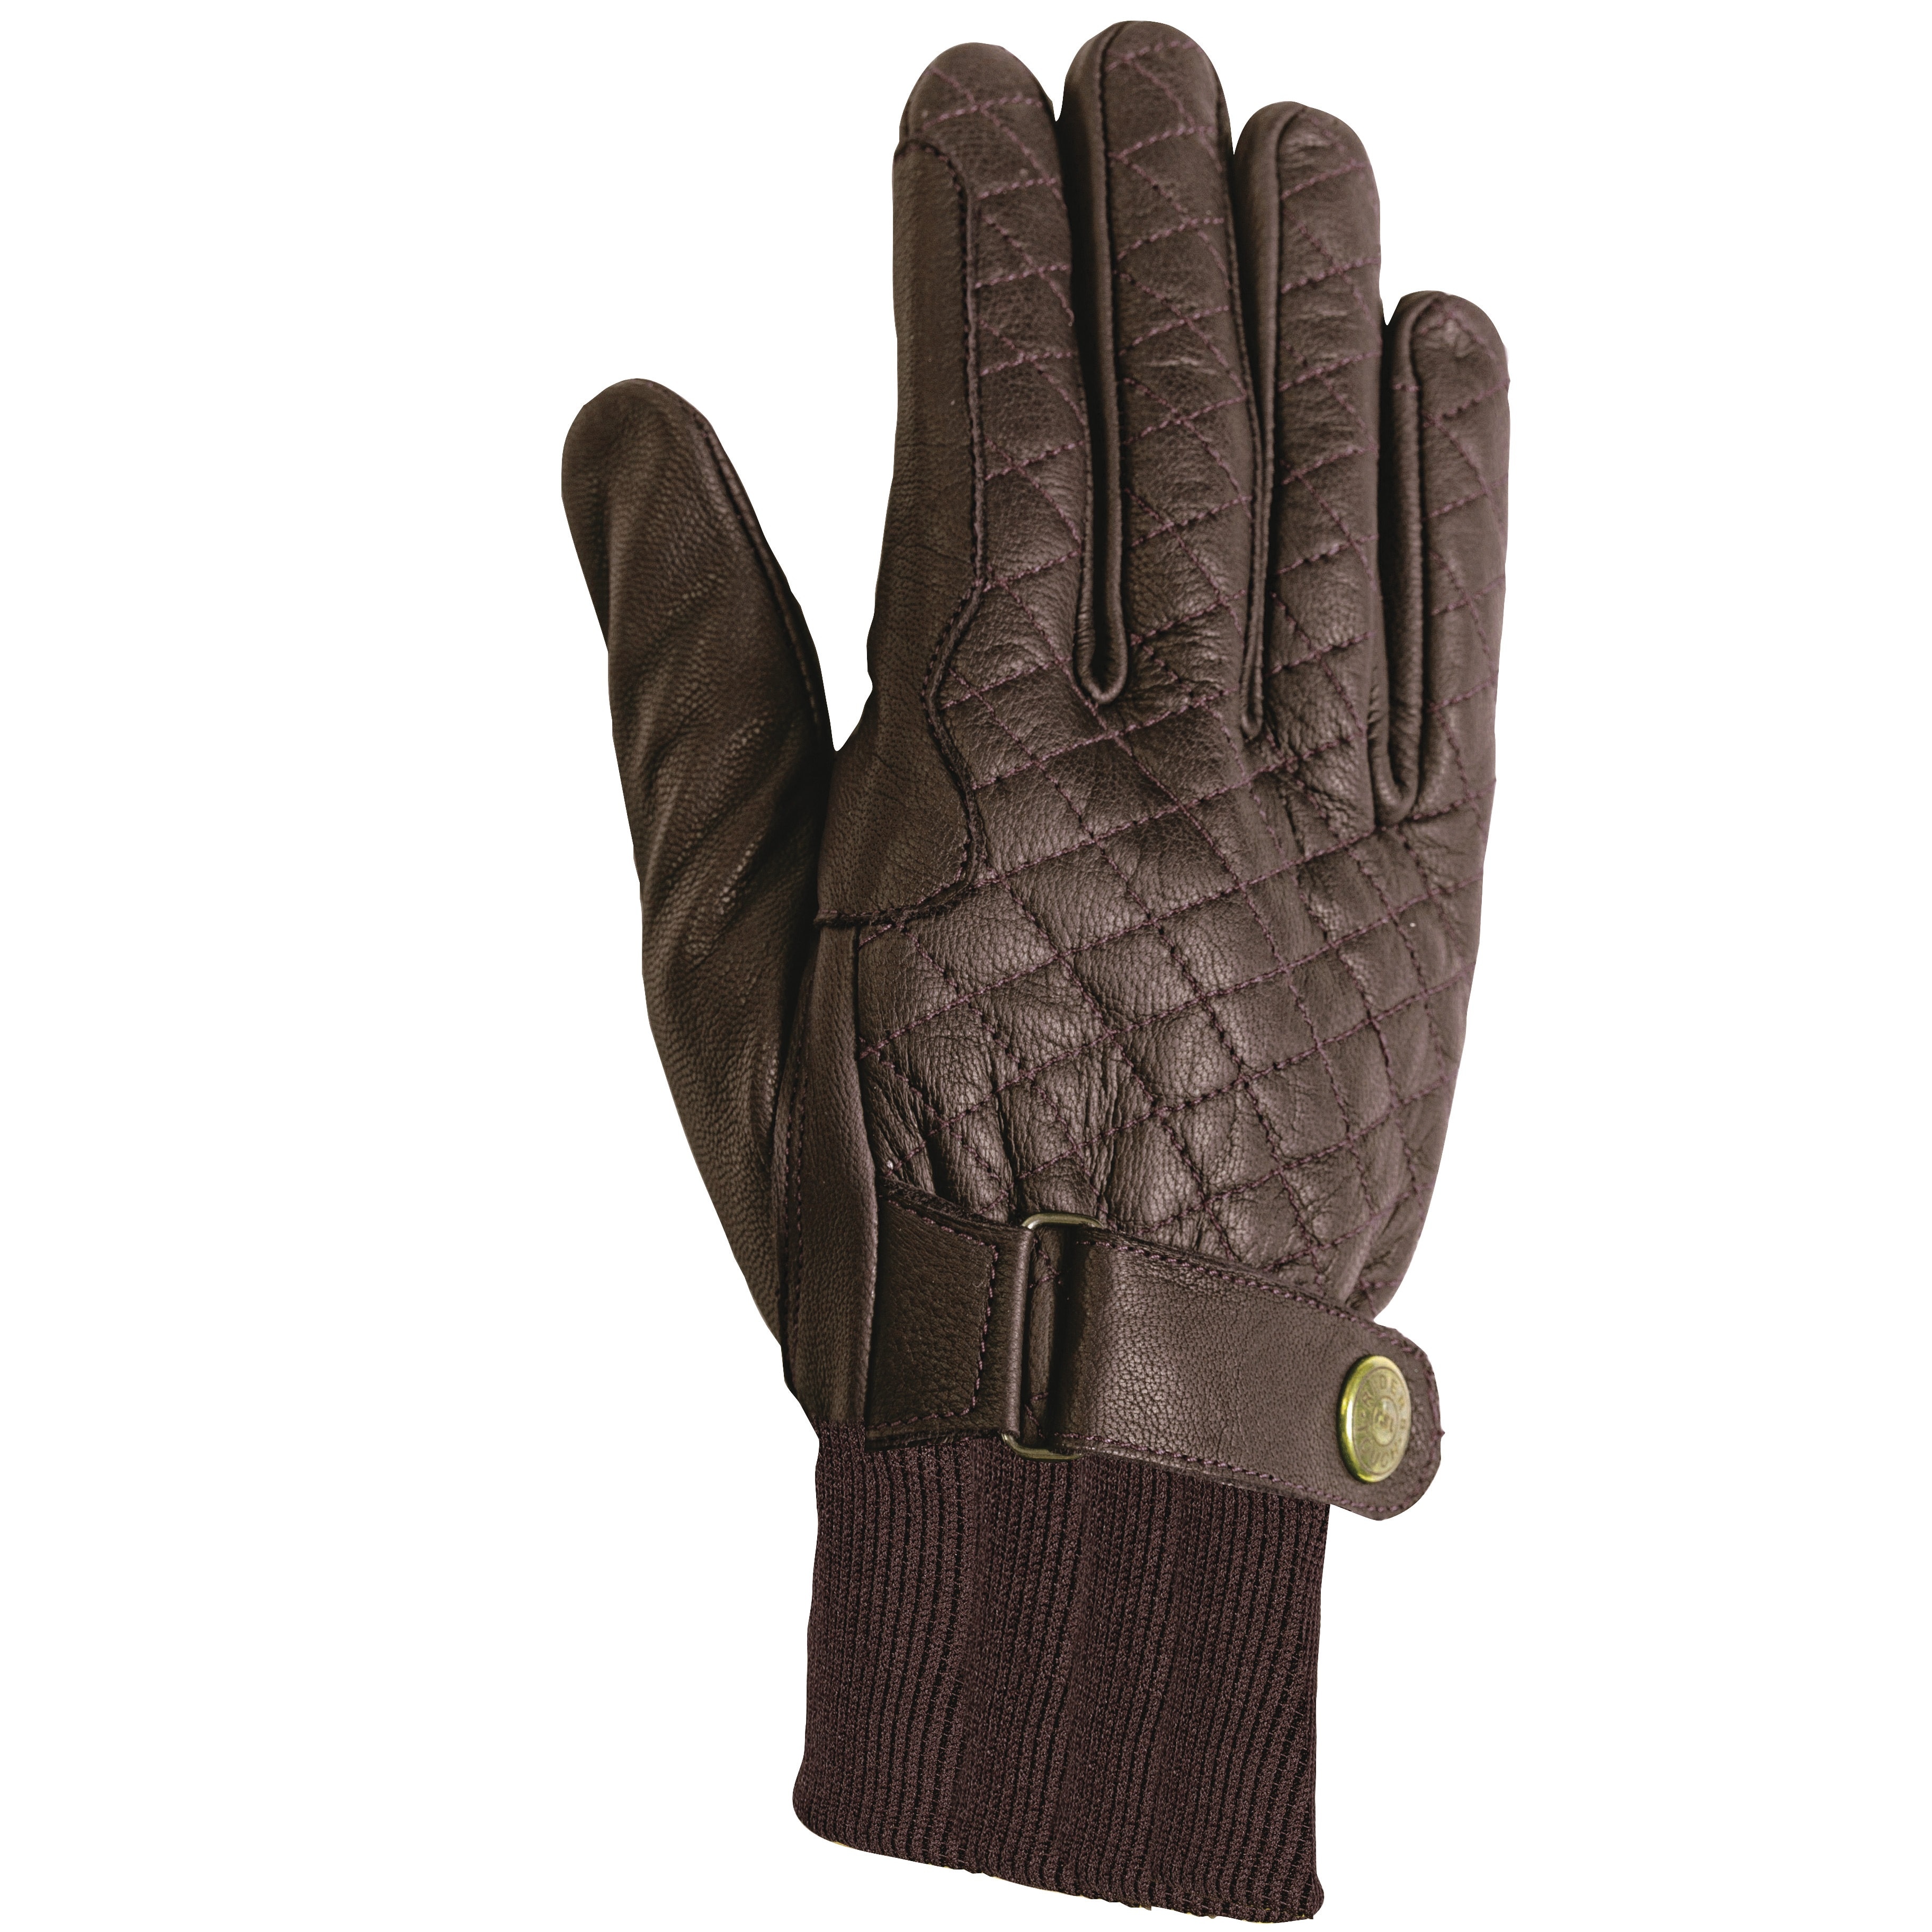 Kitzbühel Winter riding gloves - Brown